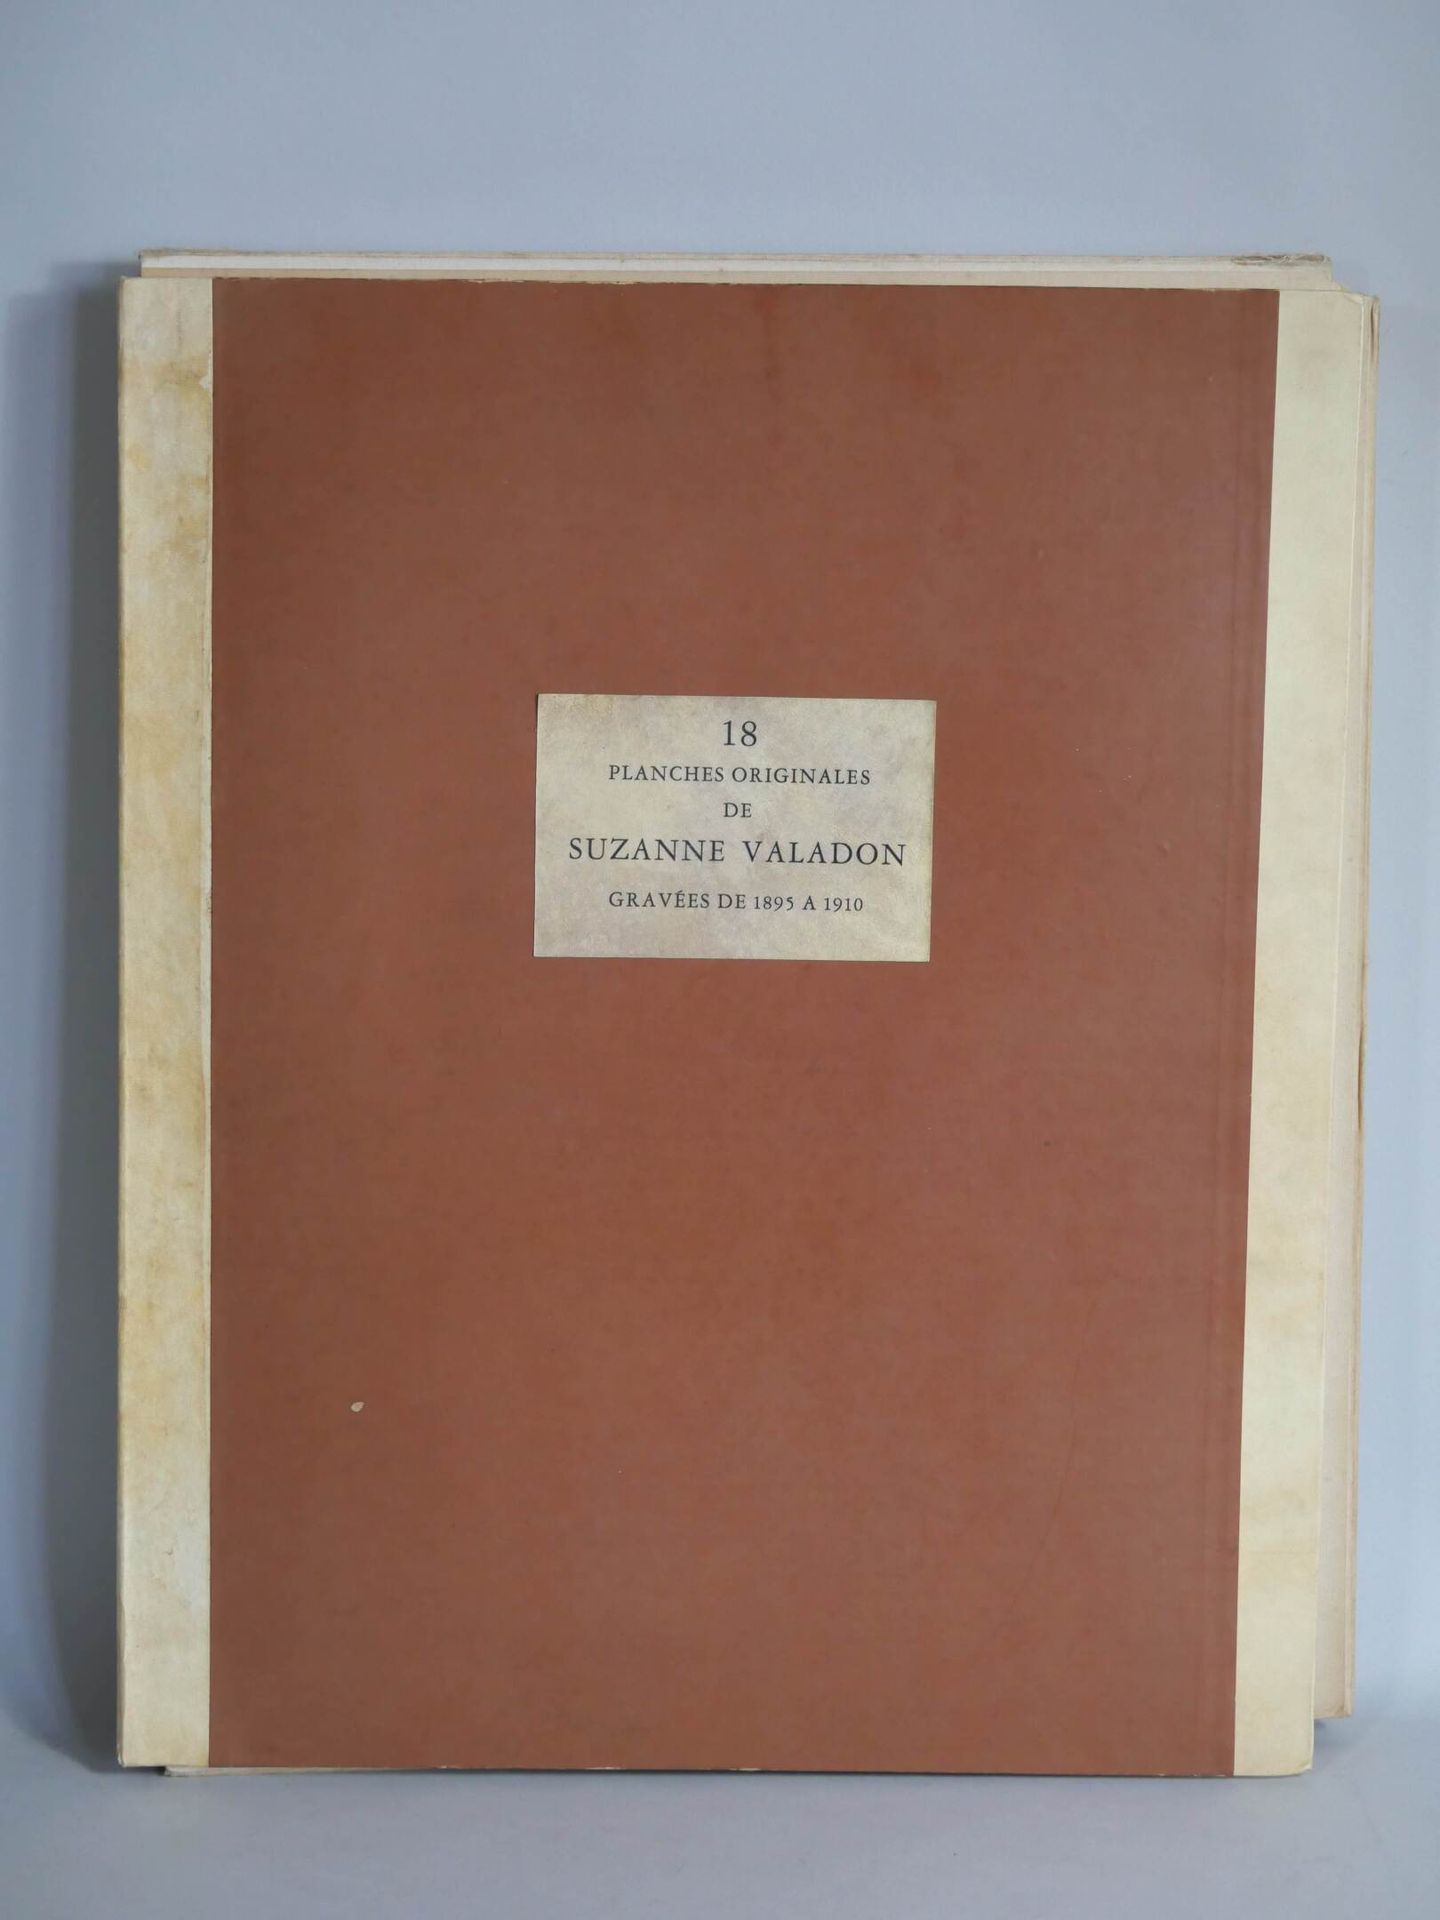 Null 苏珊娜-瓦拉东 (1865 - 1938)
18张苏珊娜-瓦拉东的原版画，1895年至1910年雕刻的。 
附有克劳德-罗杰-马克思的序言和目录文章。&hellip;